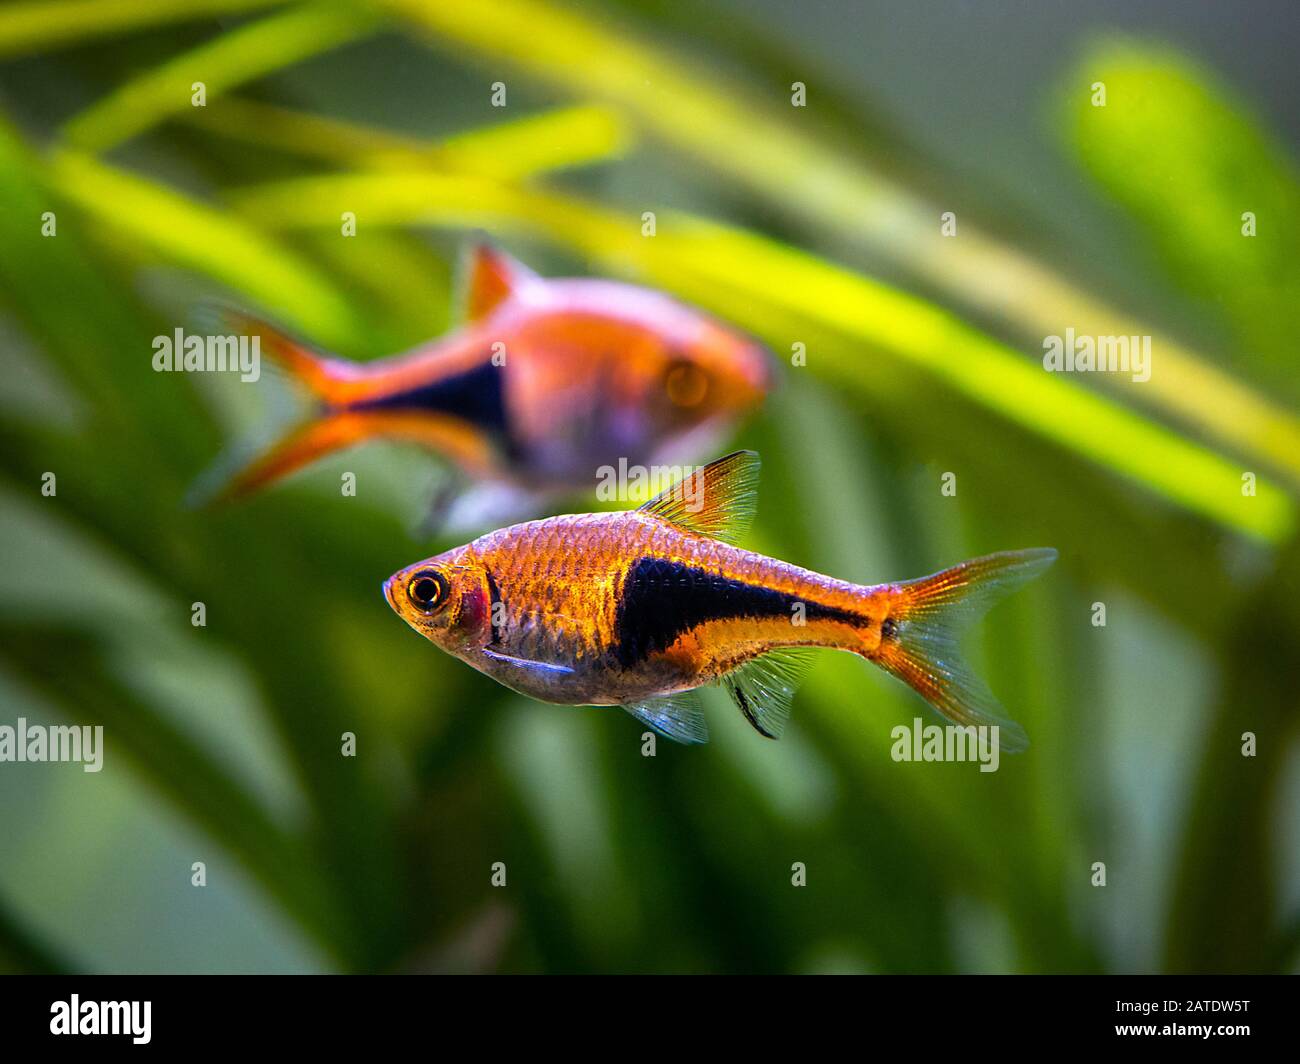 Harlequin rasbora (Trigonostigma heteromorpha) on a fish tank Stock Photo